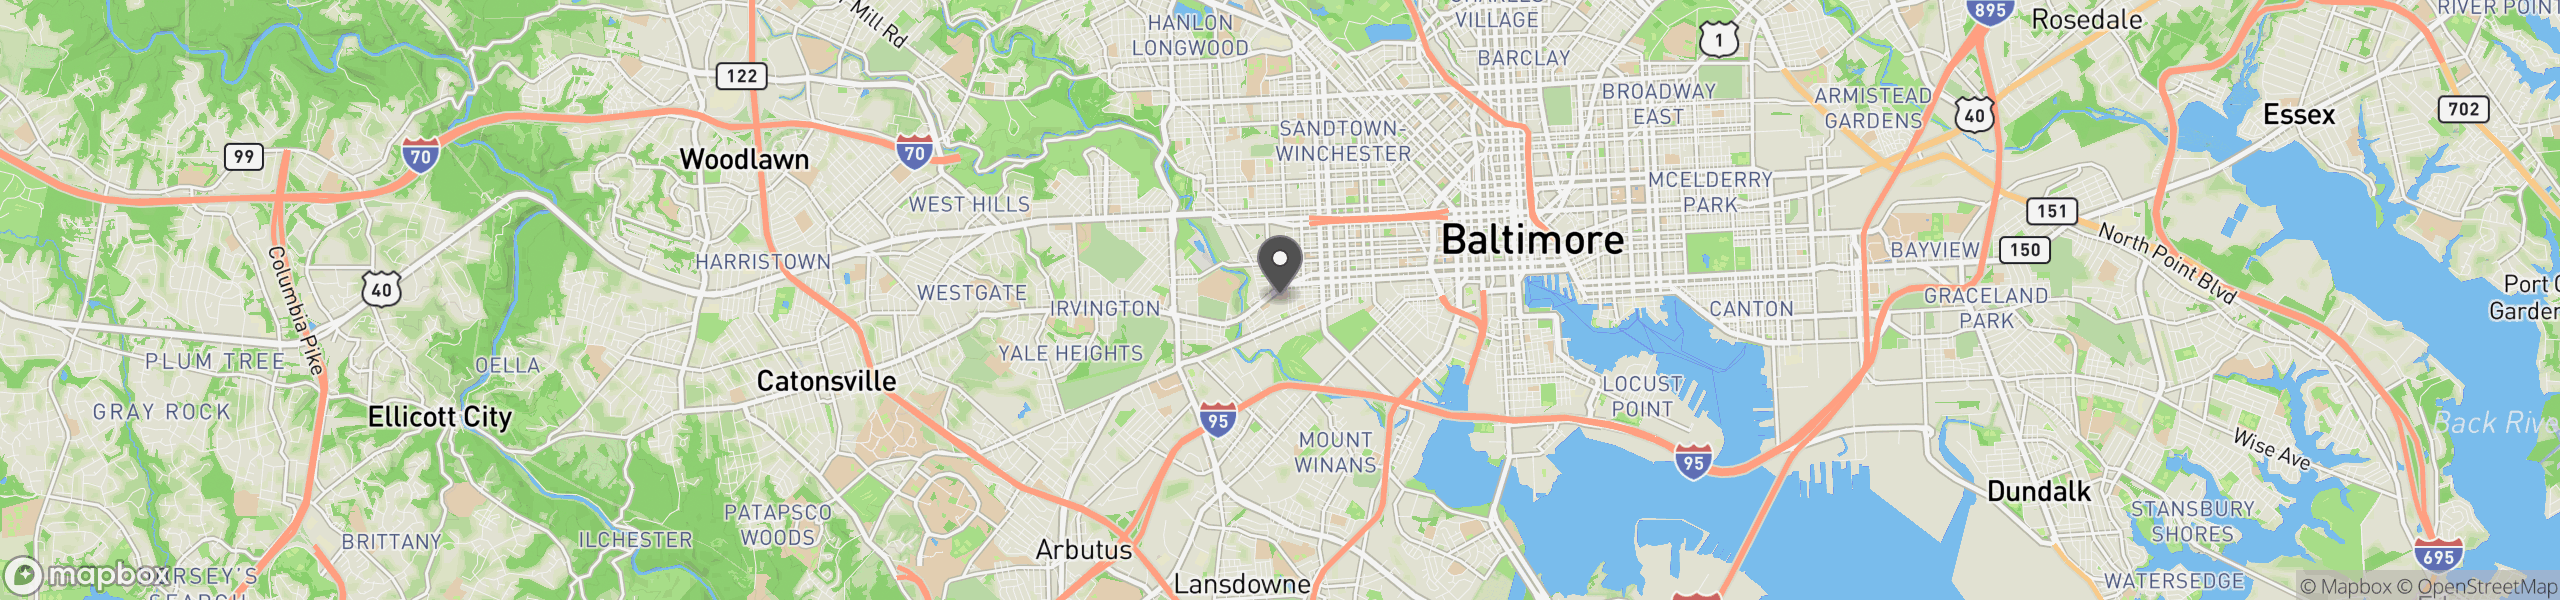 Baltimore, MD 21223